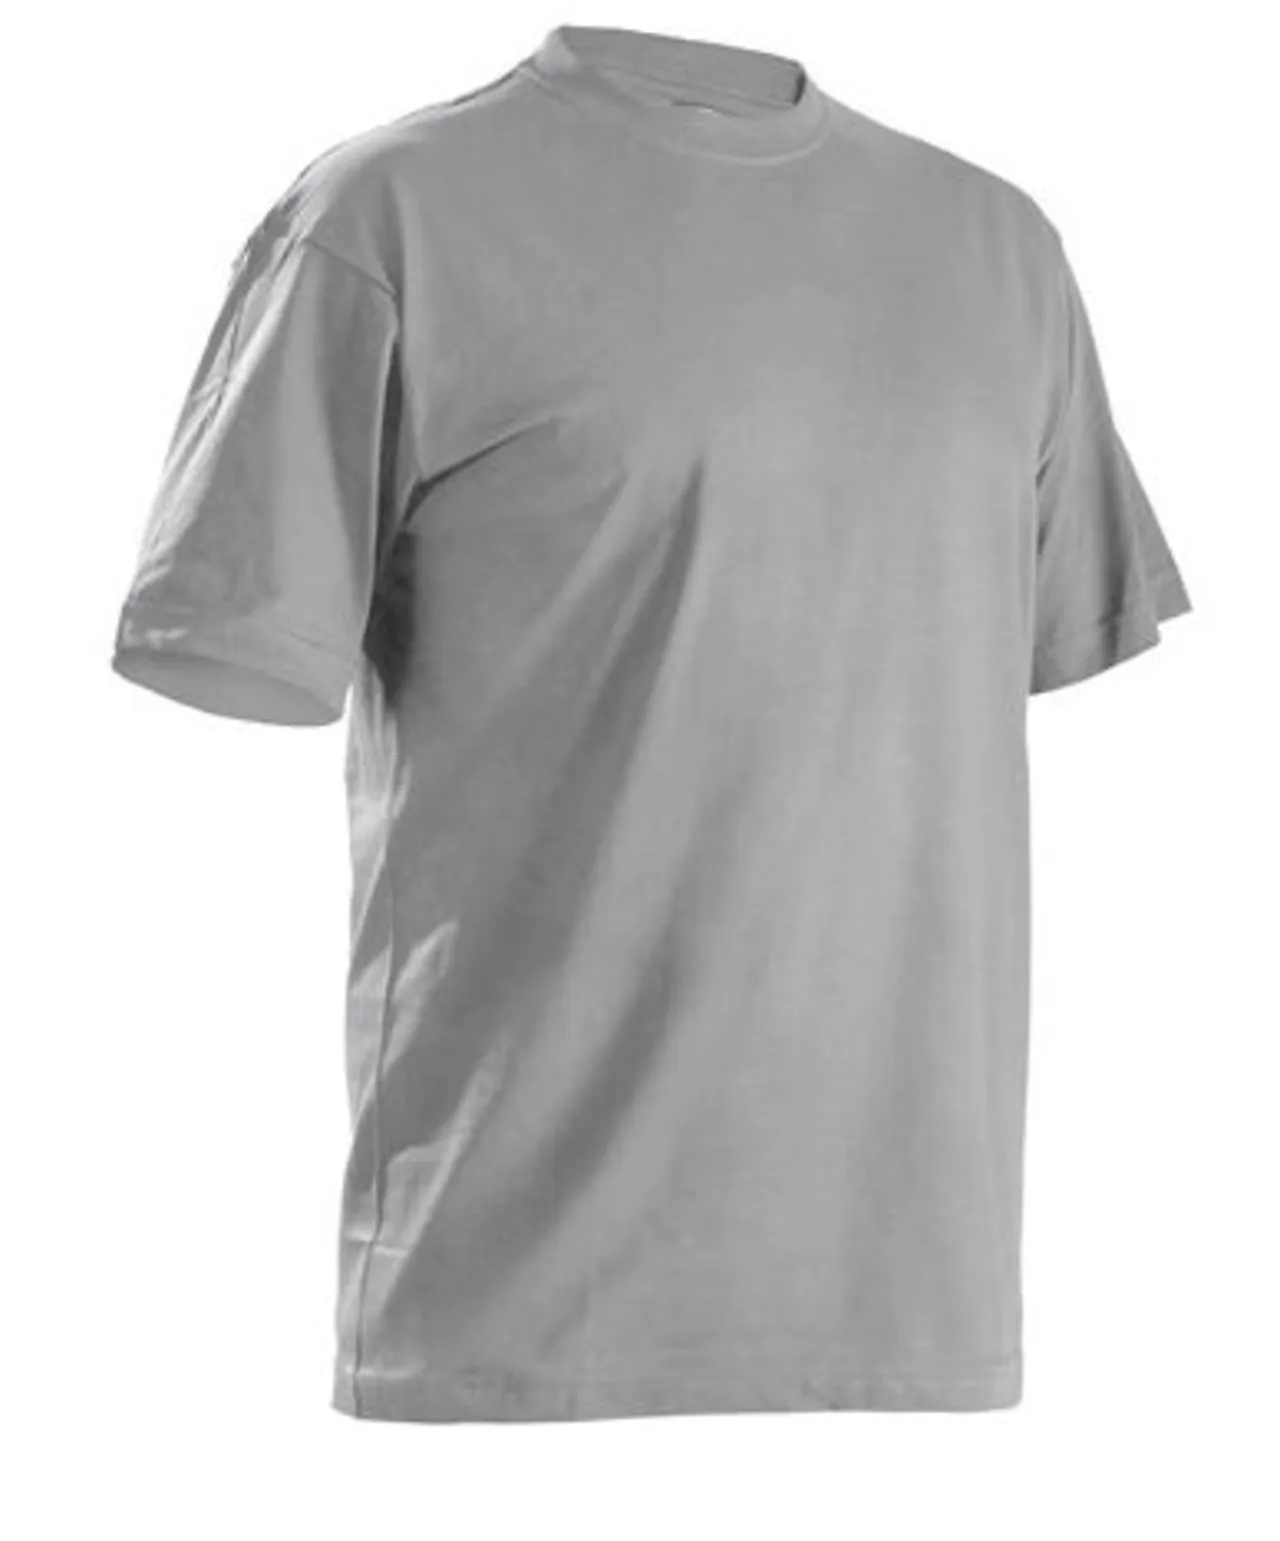 T-skjorte 5 pk 3325104294004xl grå null - null - 2 - Miniatyr